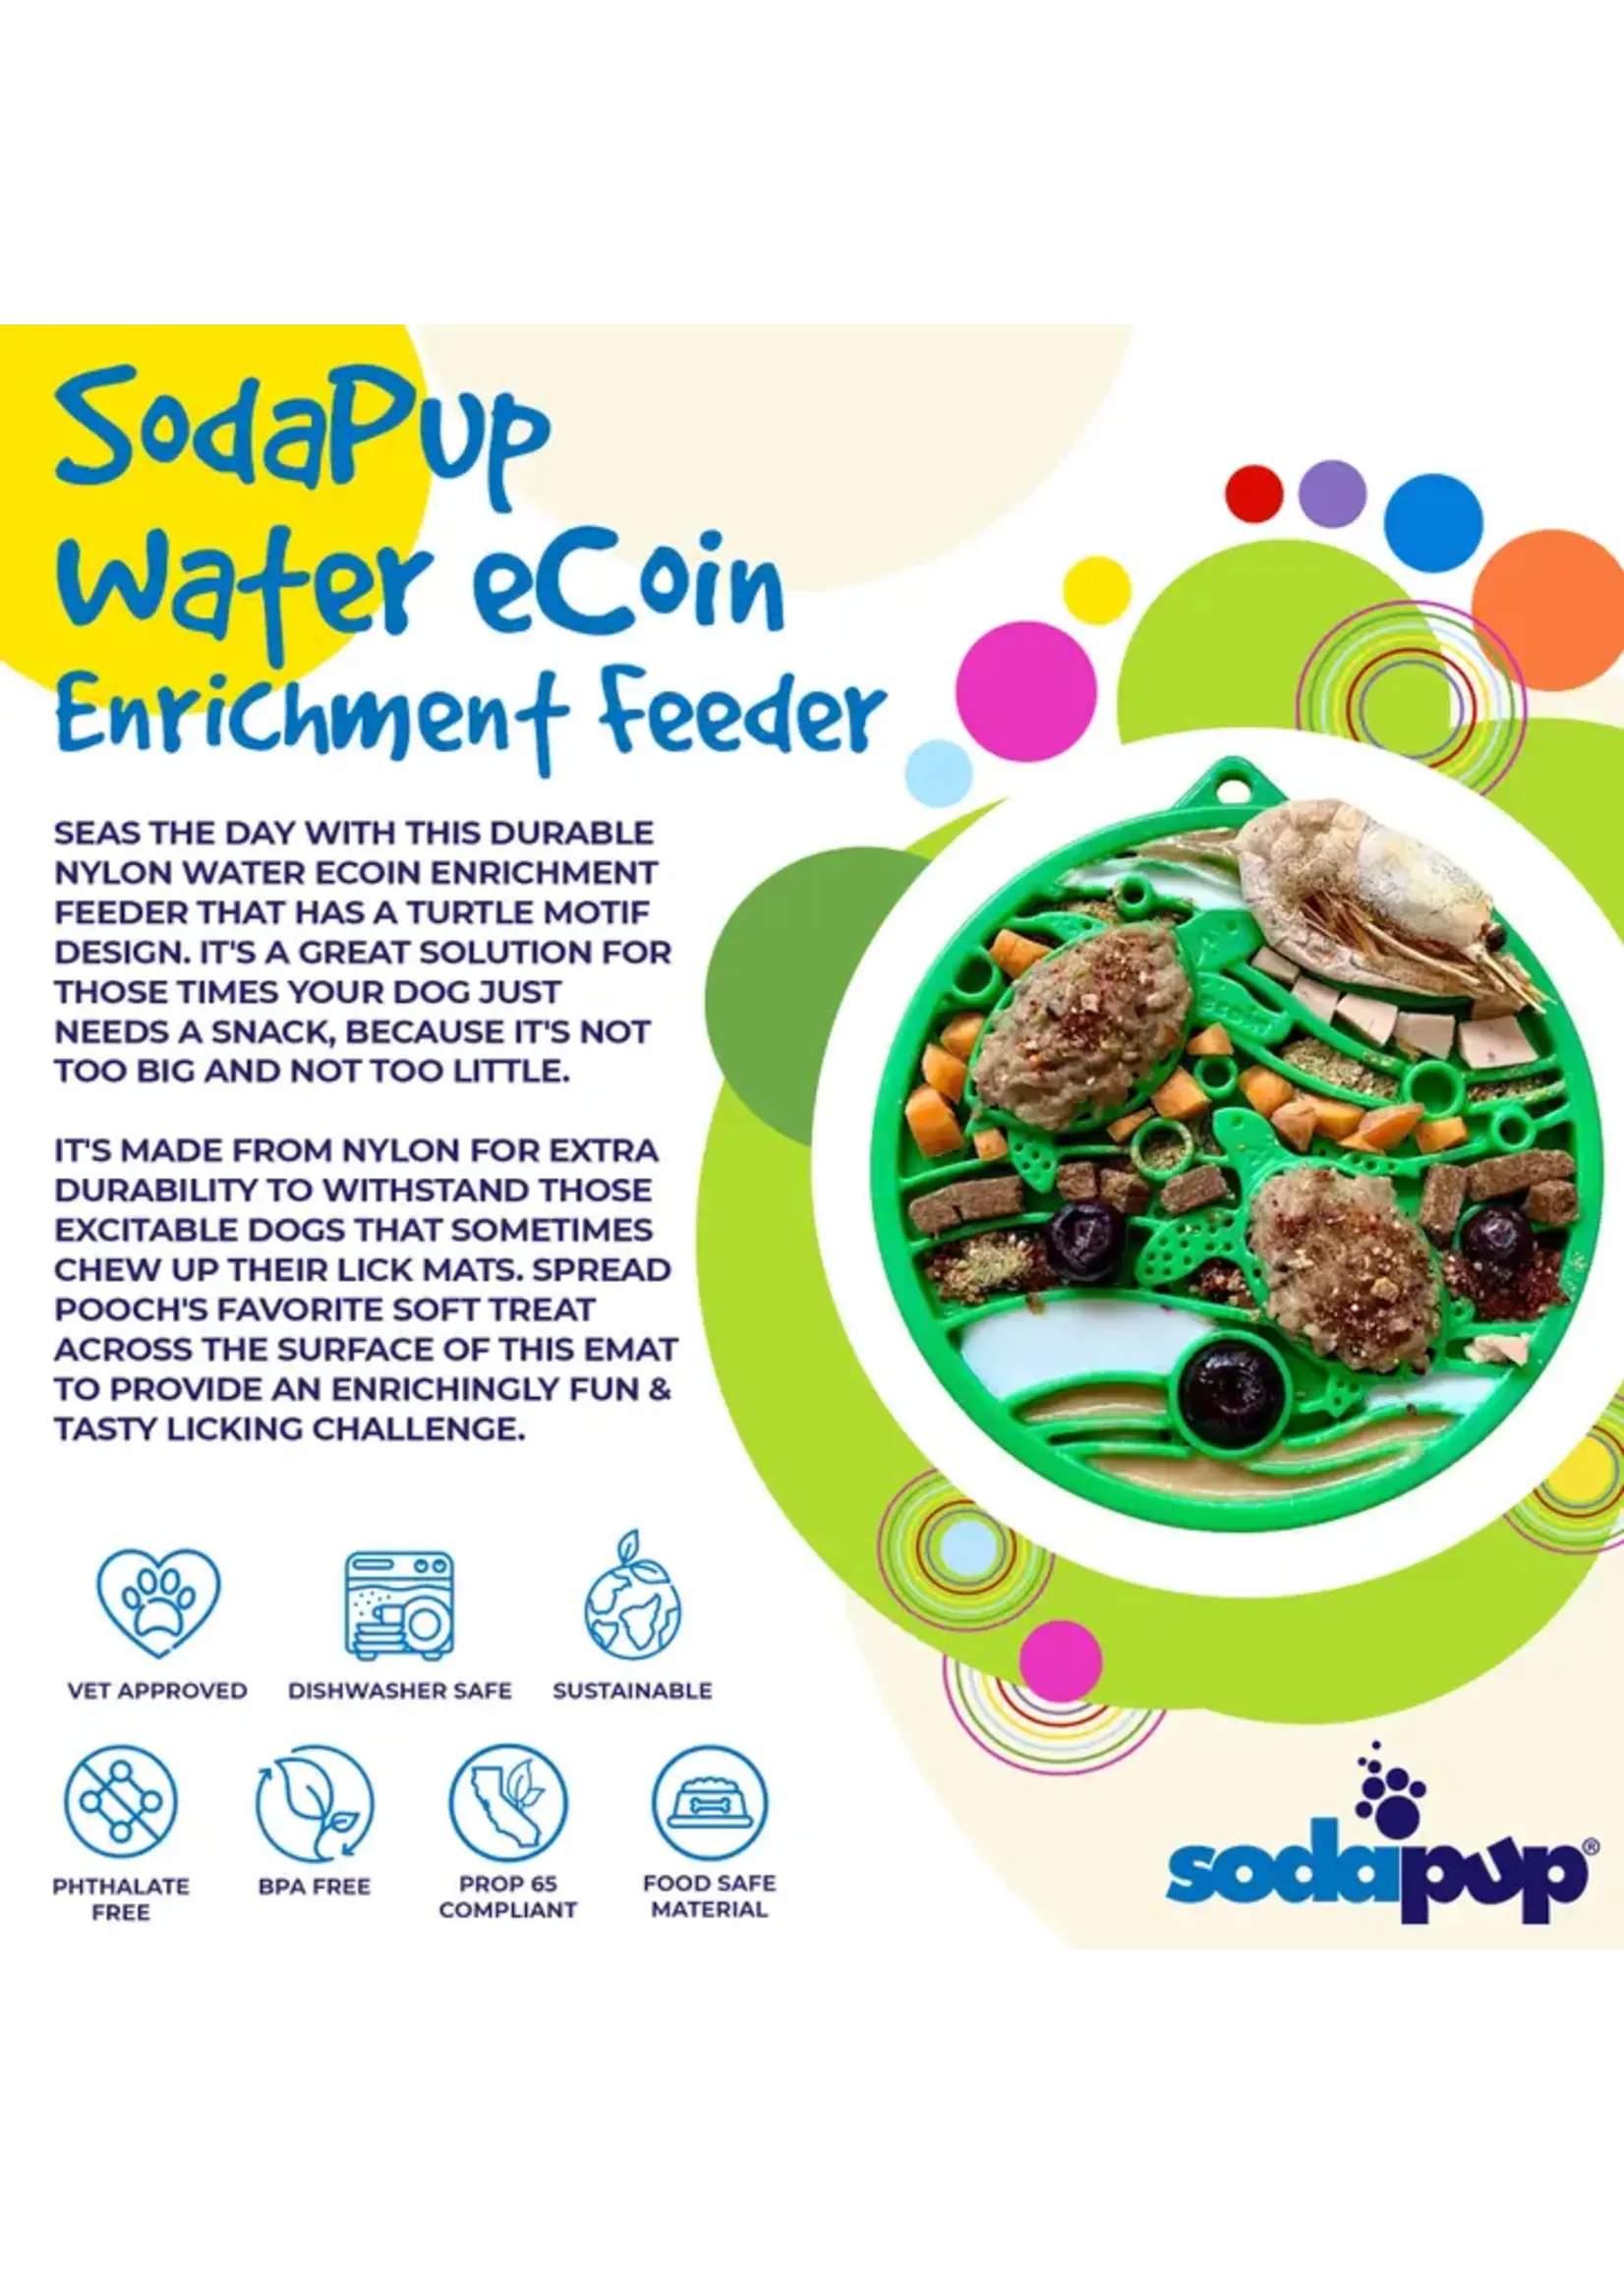 SodaPup Durable "water" ecoin enrichment coin